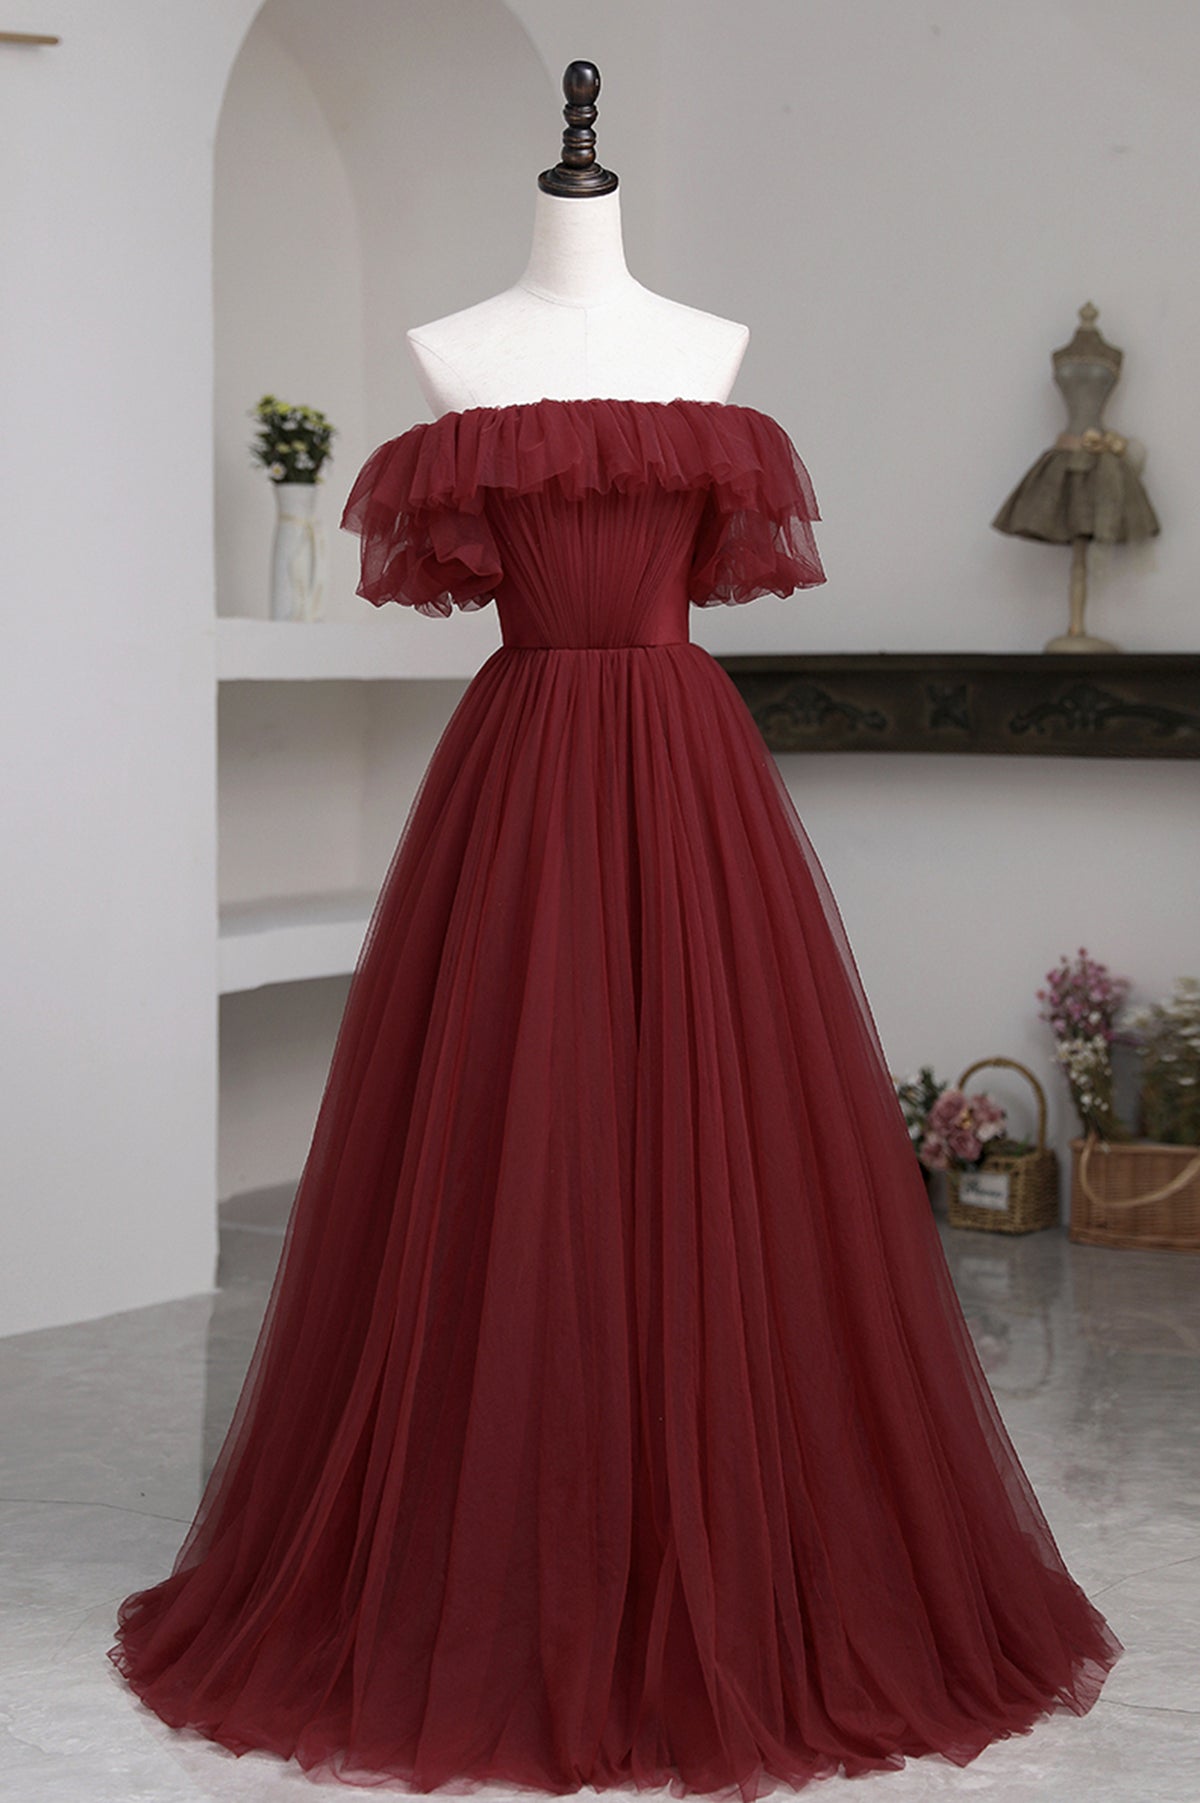 Burgundy Tulle Off the Shoulder Prom Dress, Long A-Line Evening Dress